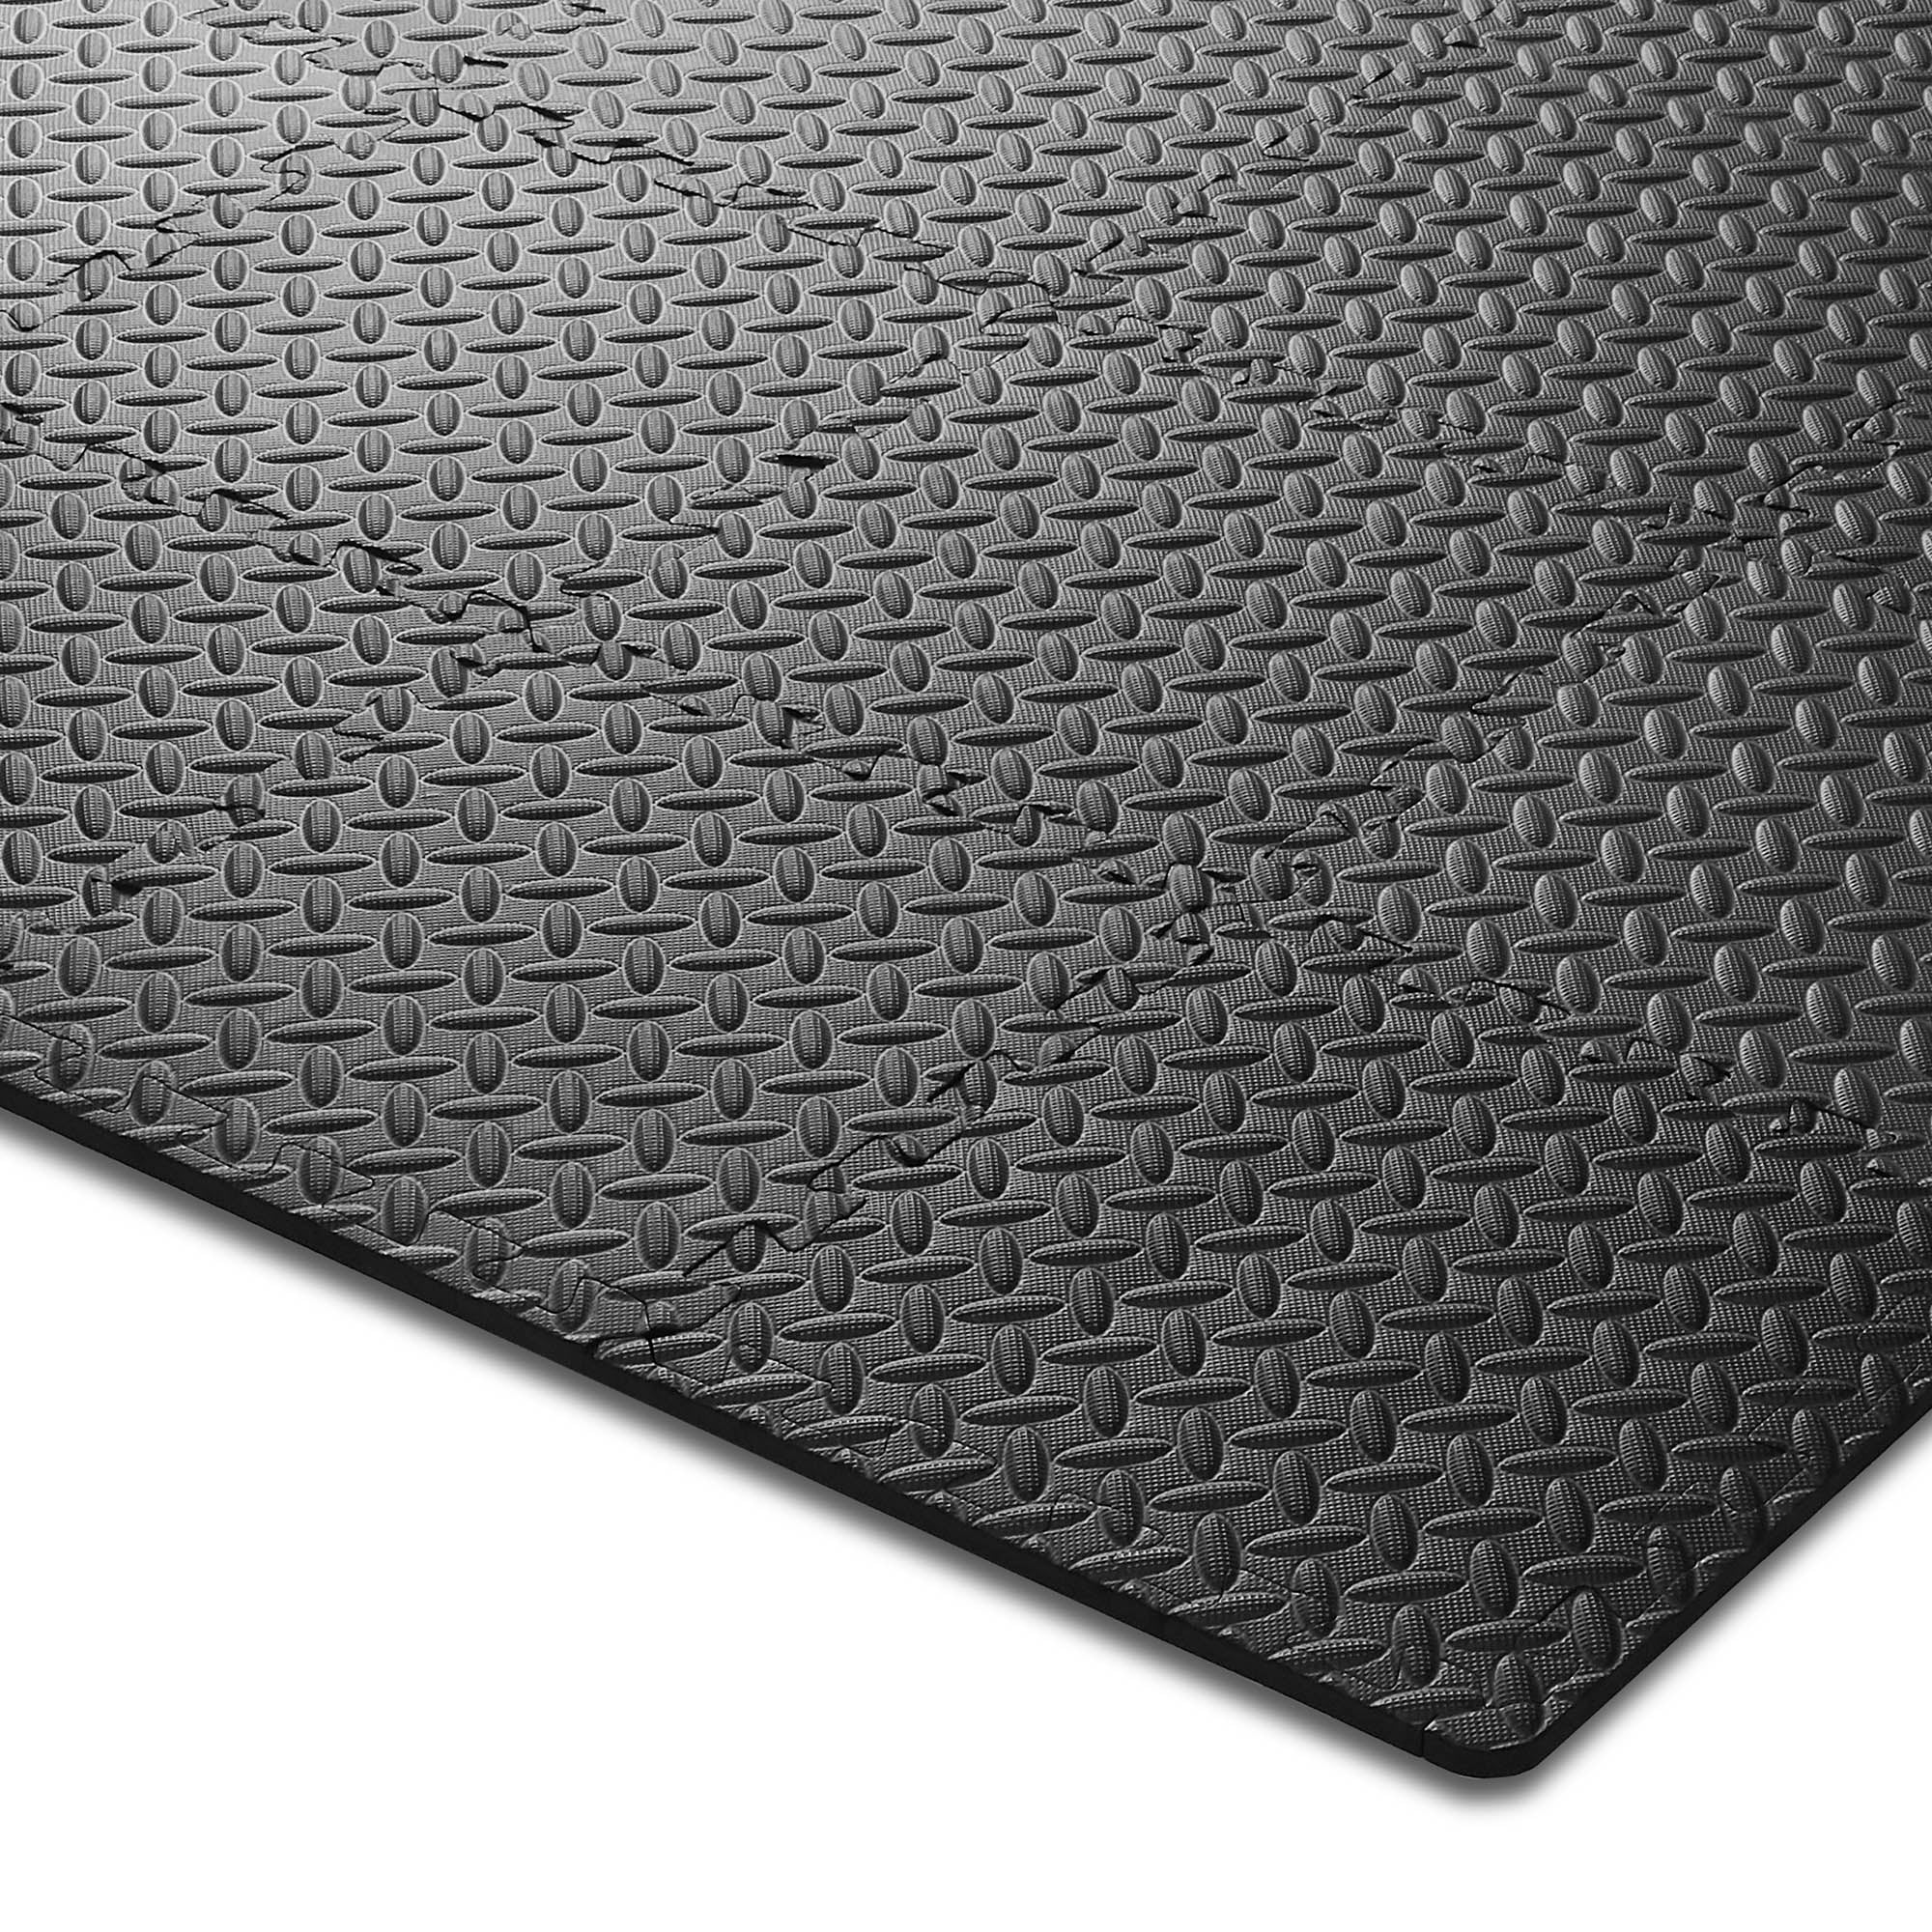 Philosophy Gym Exercise Equipment Mat, 36 x 84-Inch, 6mm Thick, High Density PVC Gym Floor Mat Black